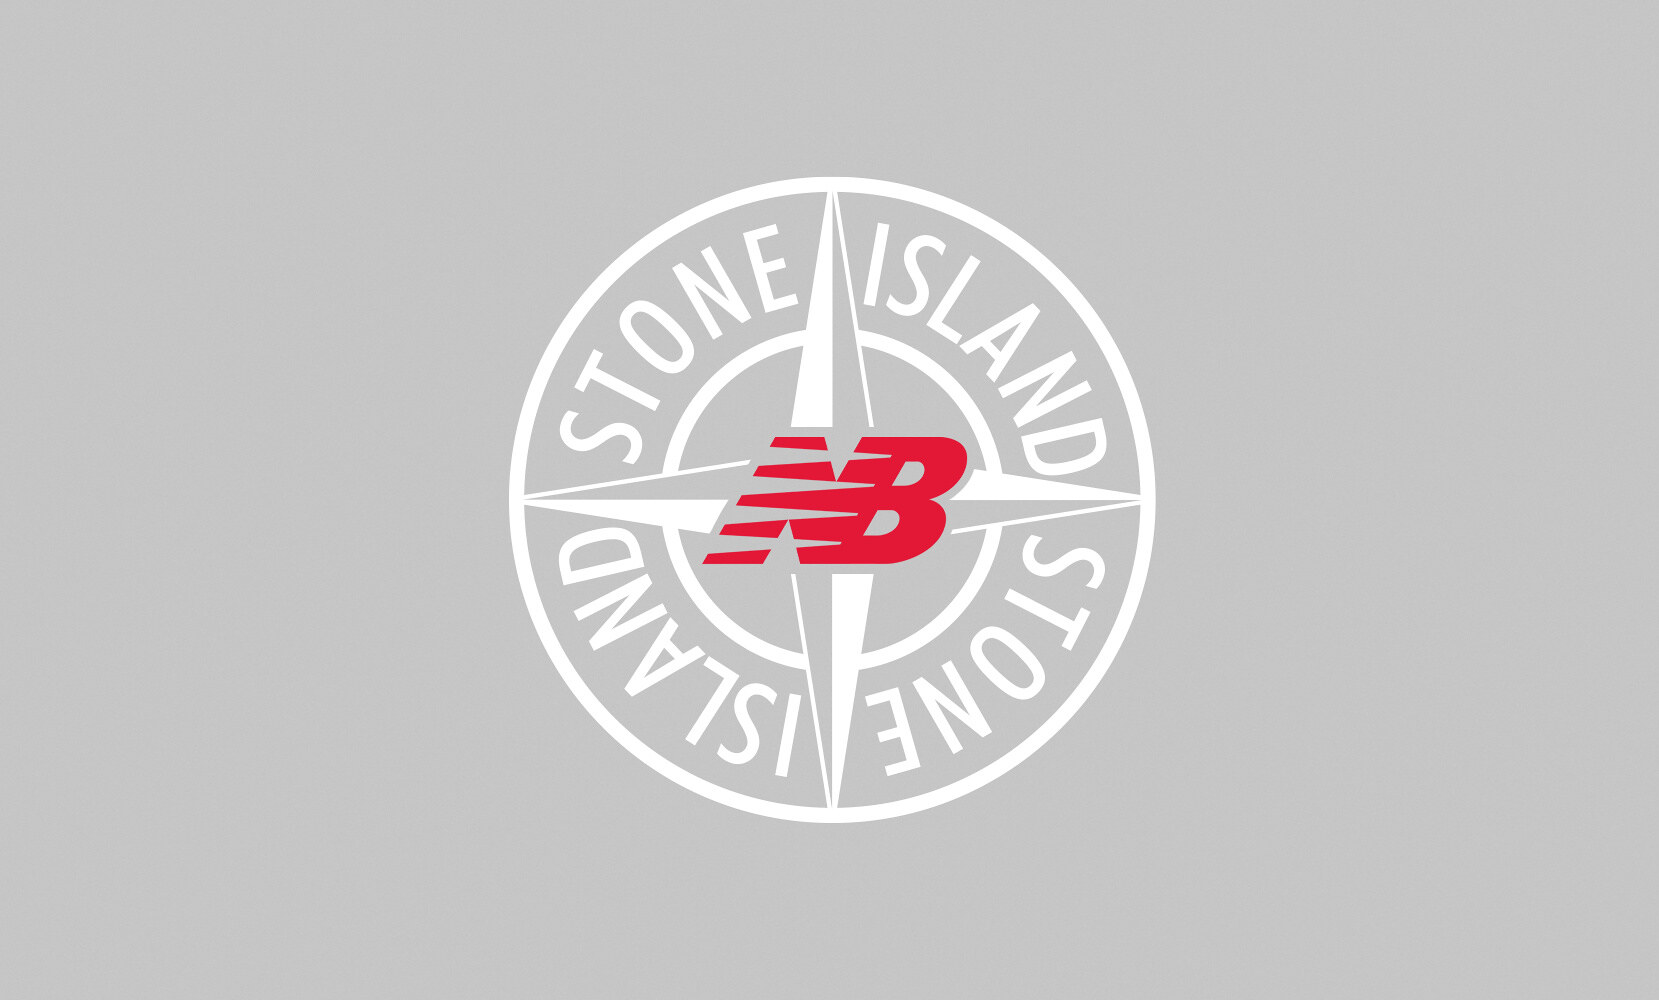 Stone Island x New Balance